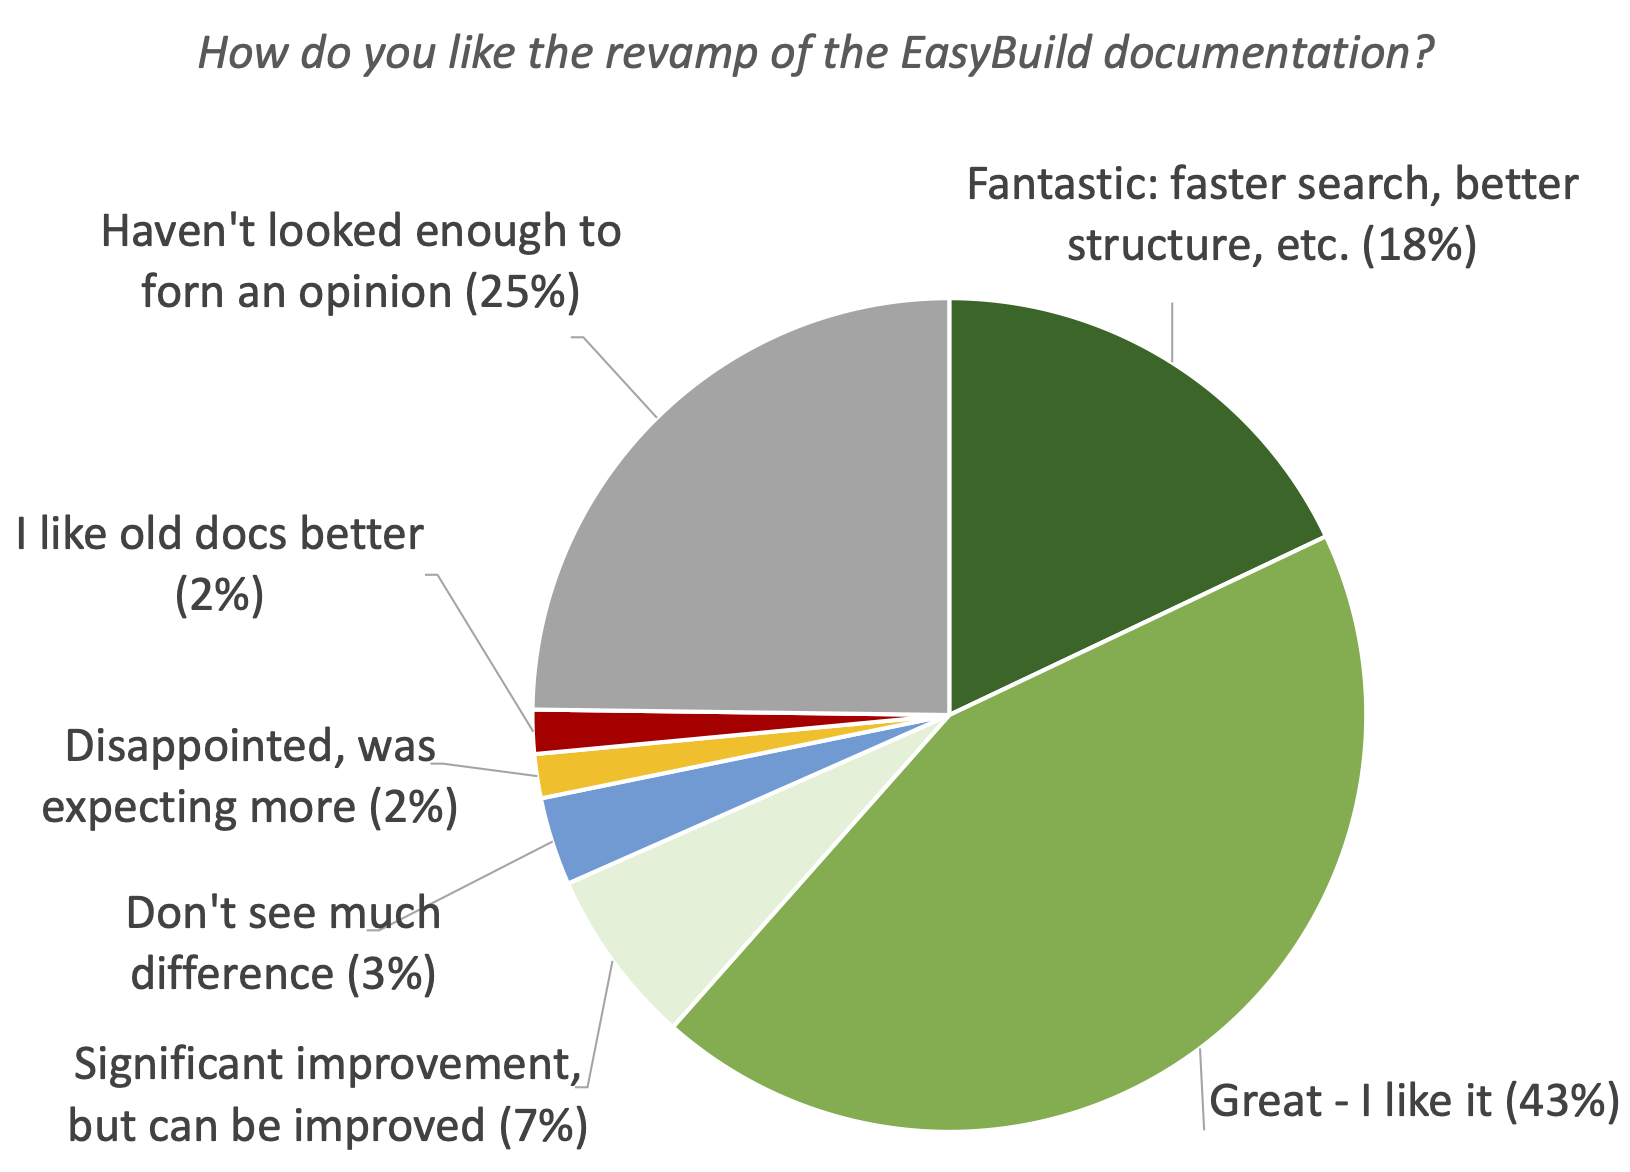 35. How do you like the revamp of the EasyBuild documentation?